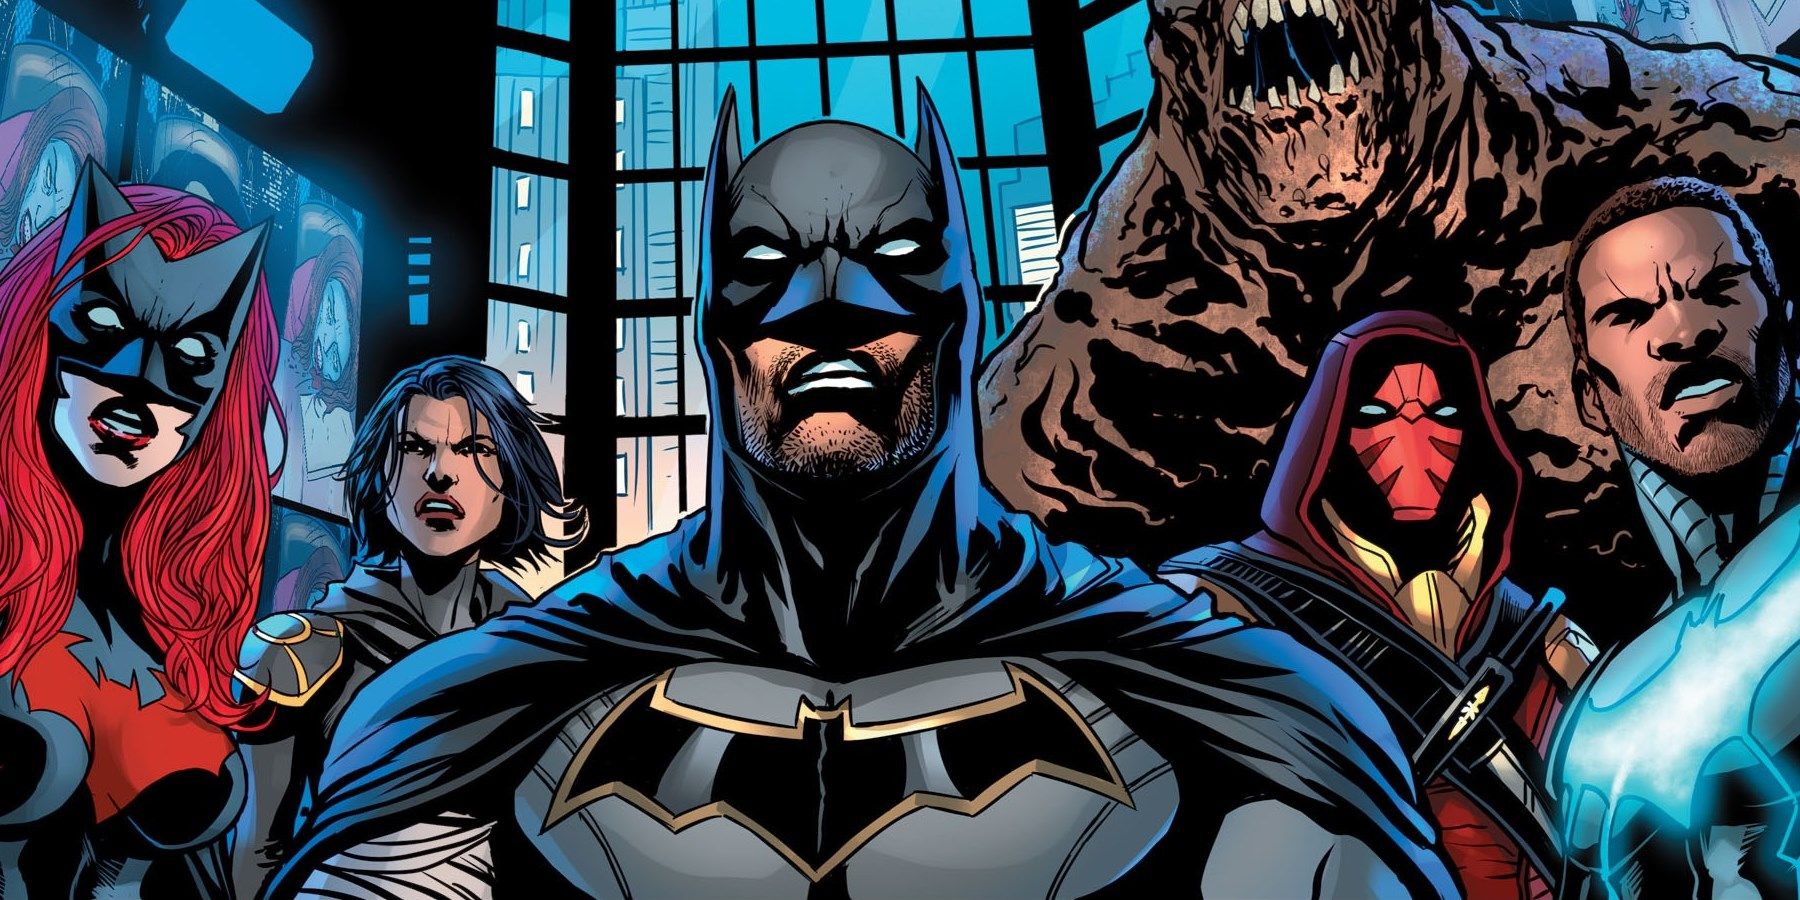 Batman Meets DC's New League of Shadows